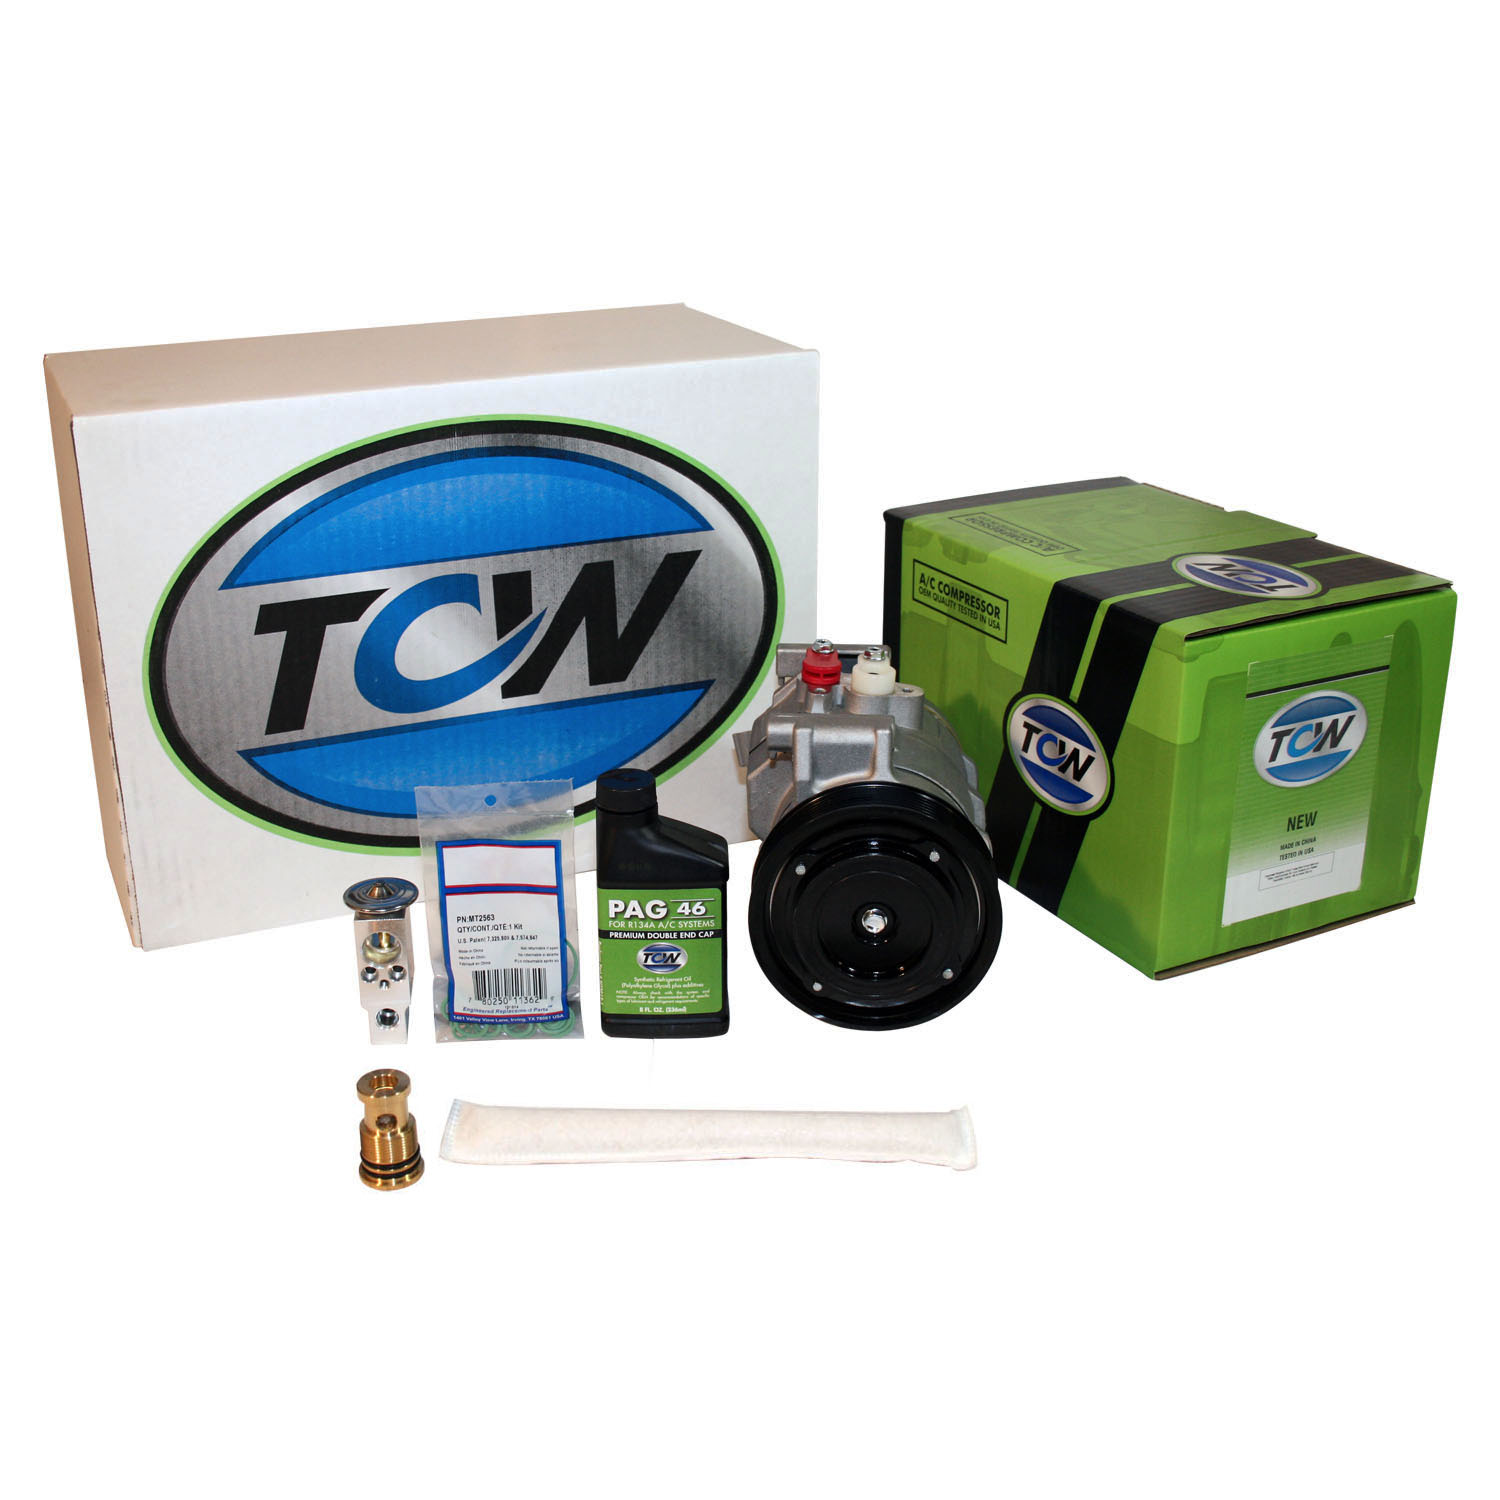 TCW Vehicle A/C Kit K1000385N New Product Image field_60b6a13a6e67c